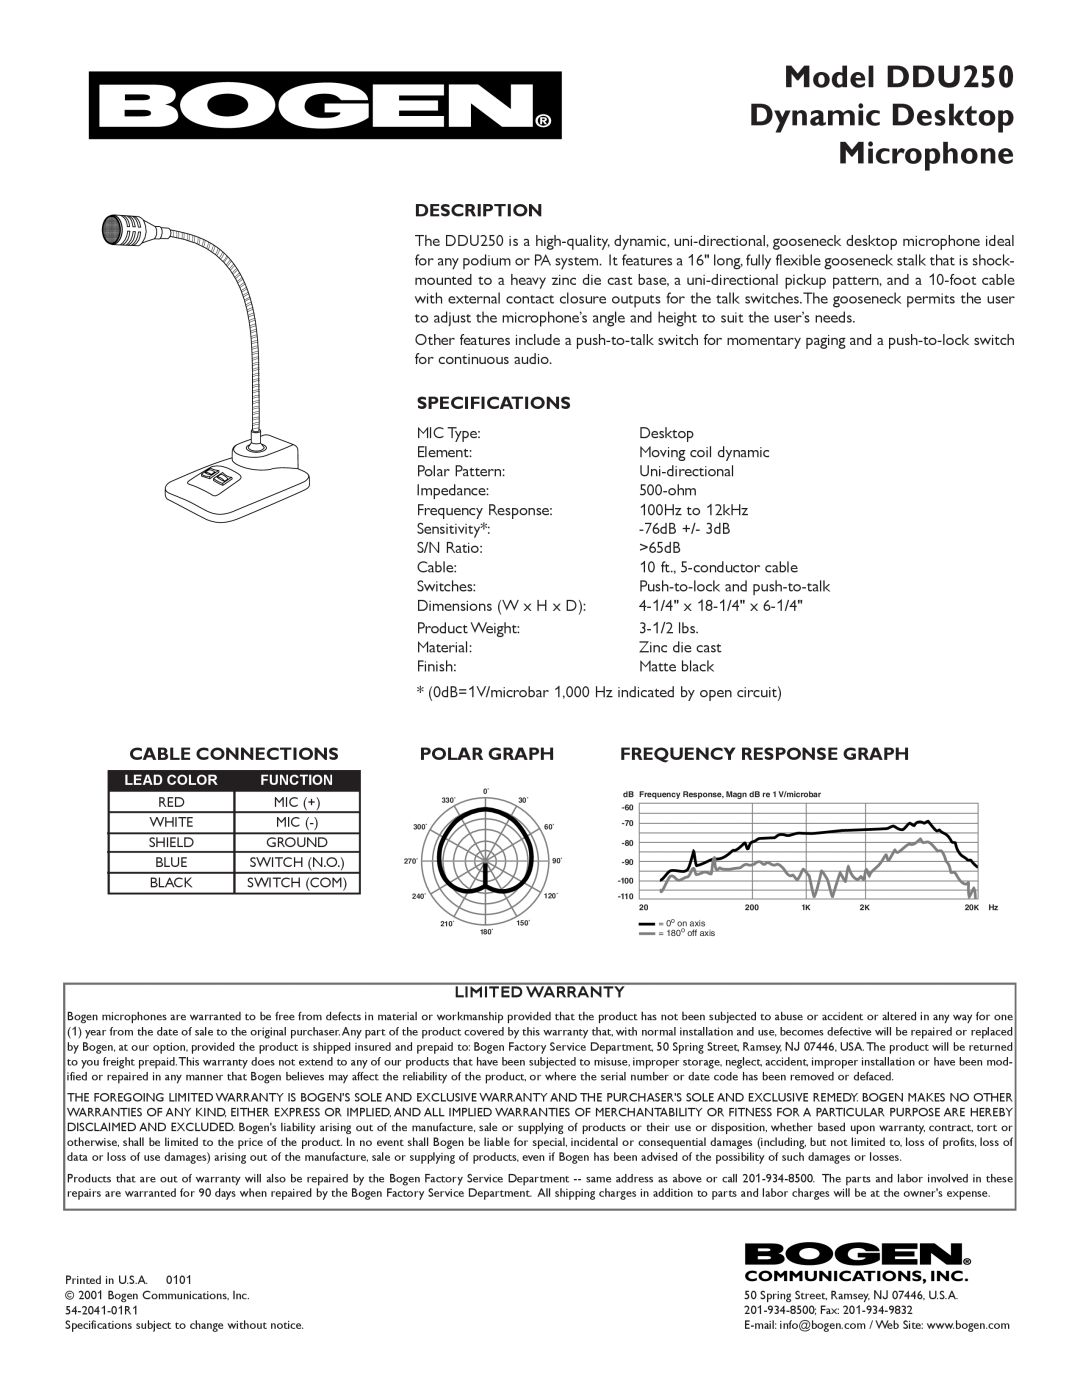 Bogen specifications Model DDU250 Dynamic Desktop Microphone, Description, Specifications, Cable Connections 